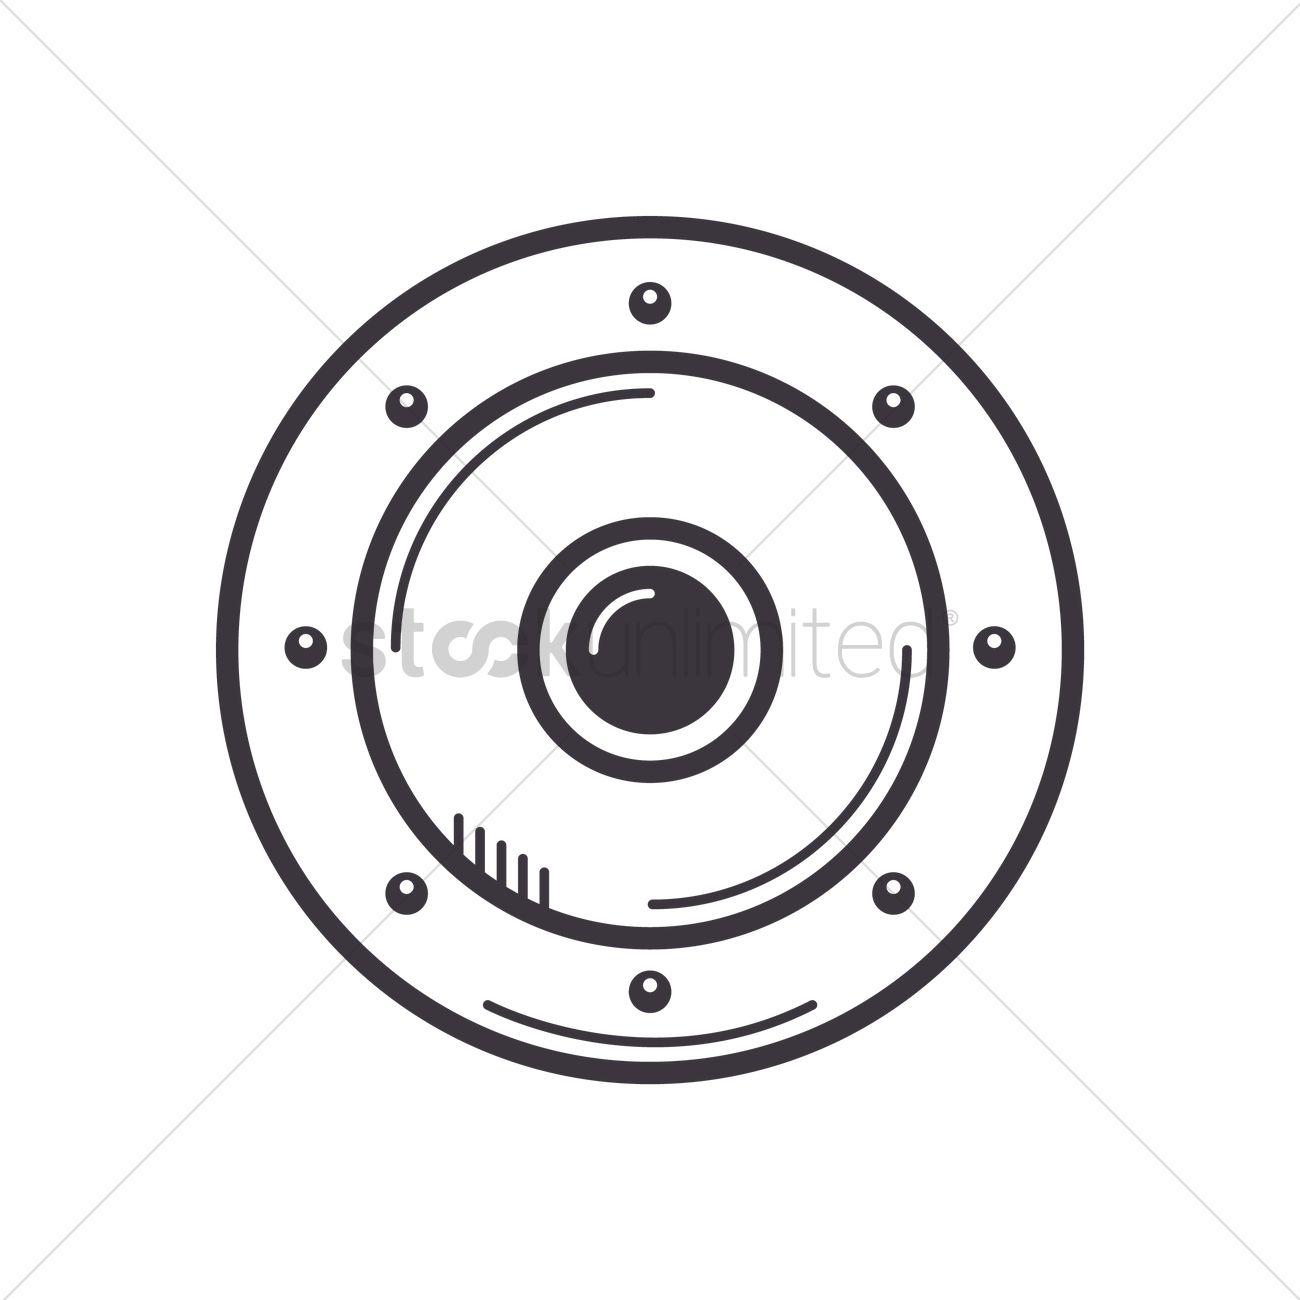 Round Shield Logo - Free Round shield Vector Image - 1533192 | StockUnlimited